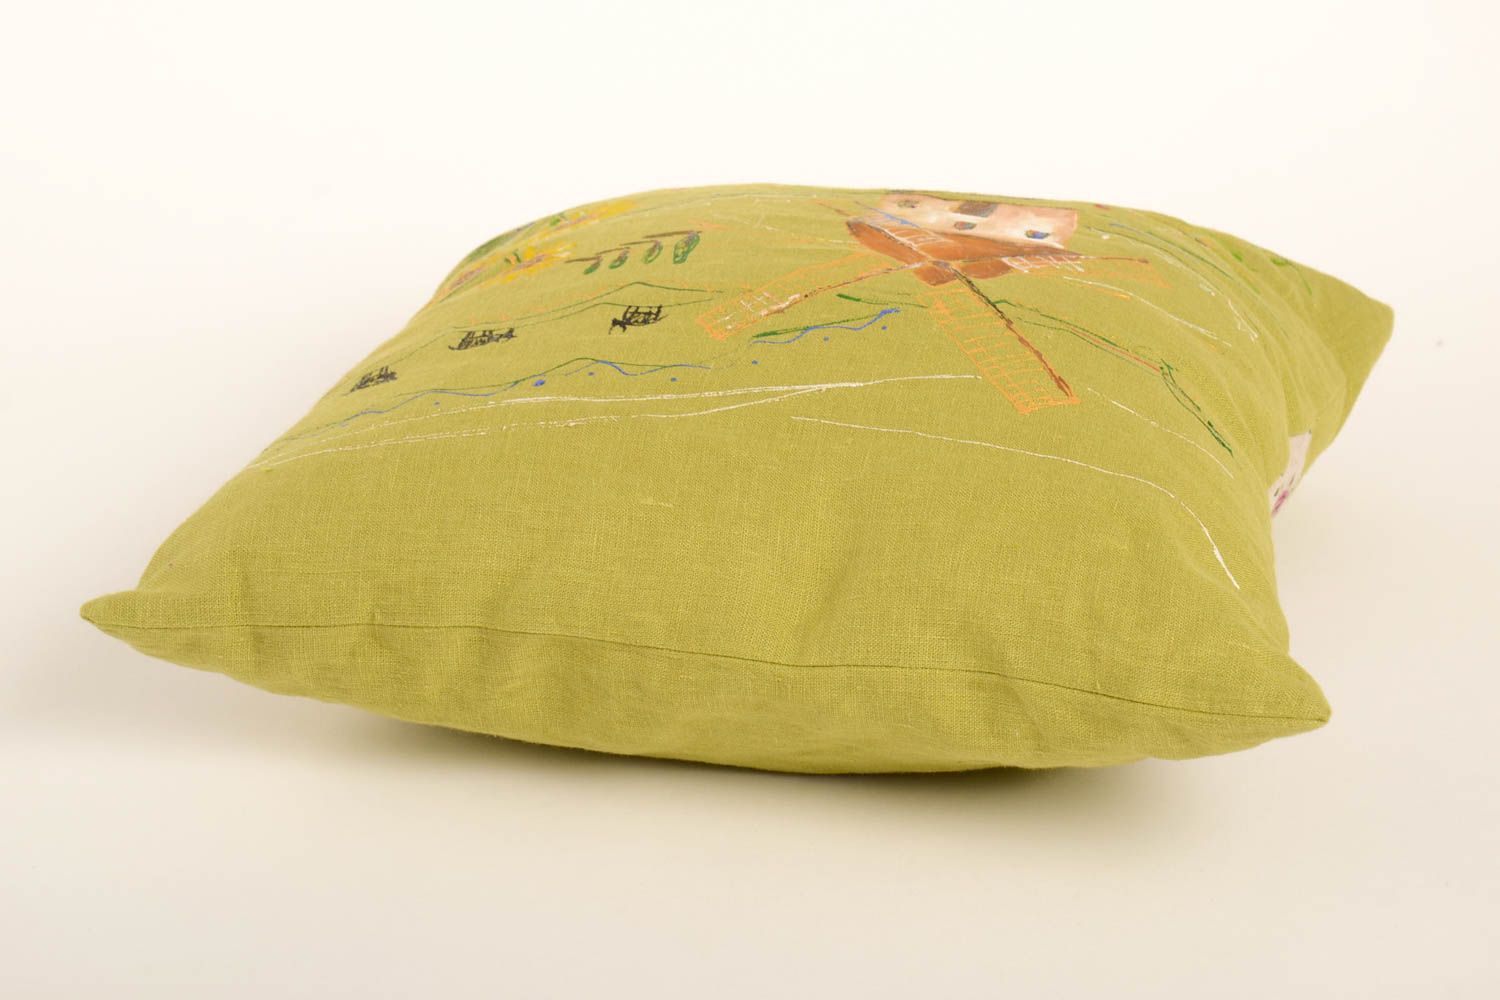 Deko Kissen handmade schönes Kissen kreative Geschenkidee Sofa Kissen olivgrün foto 5